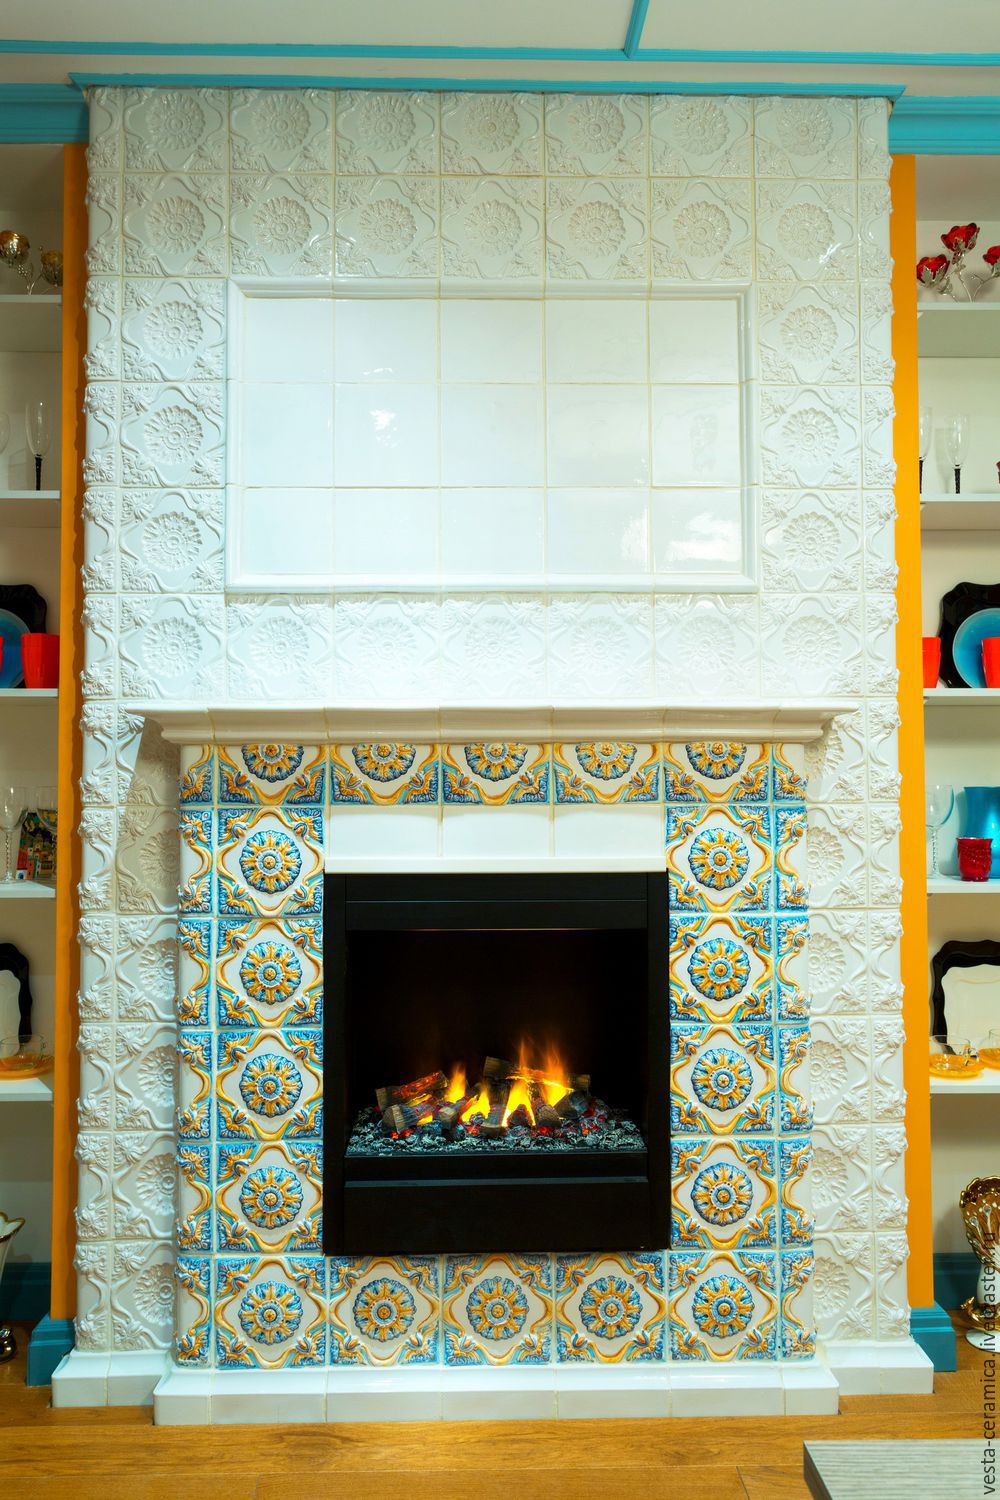 Painting Fireplace Insert Beautiful Tiled Fireplace